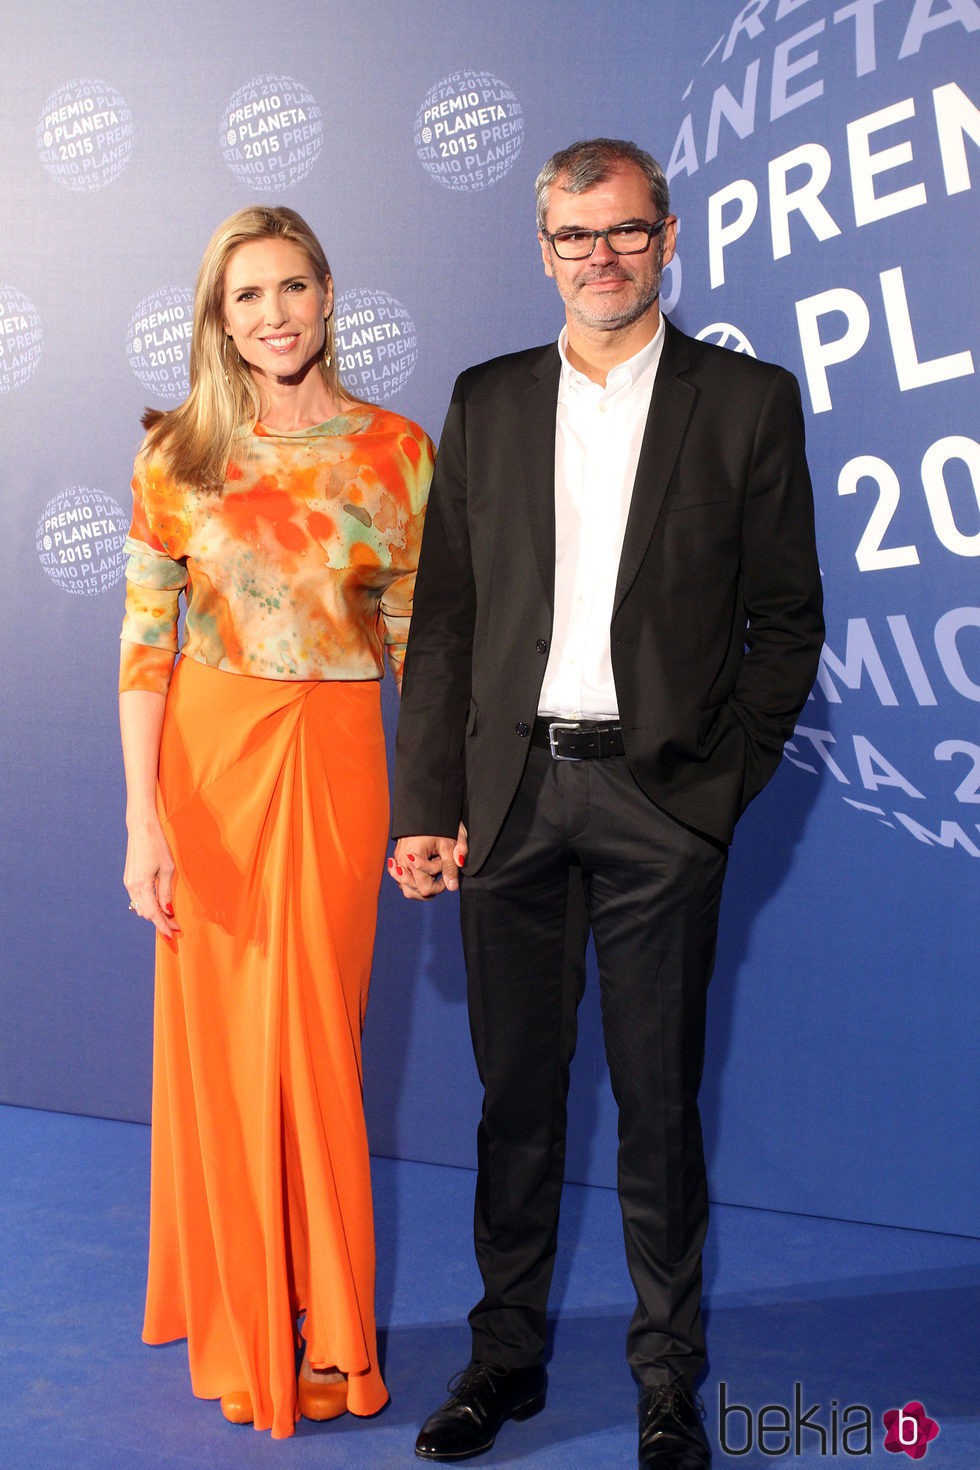 Judit Mascó y Eduardo Vicente en la entrega del Premio Planeta 2015